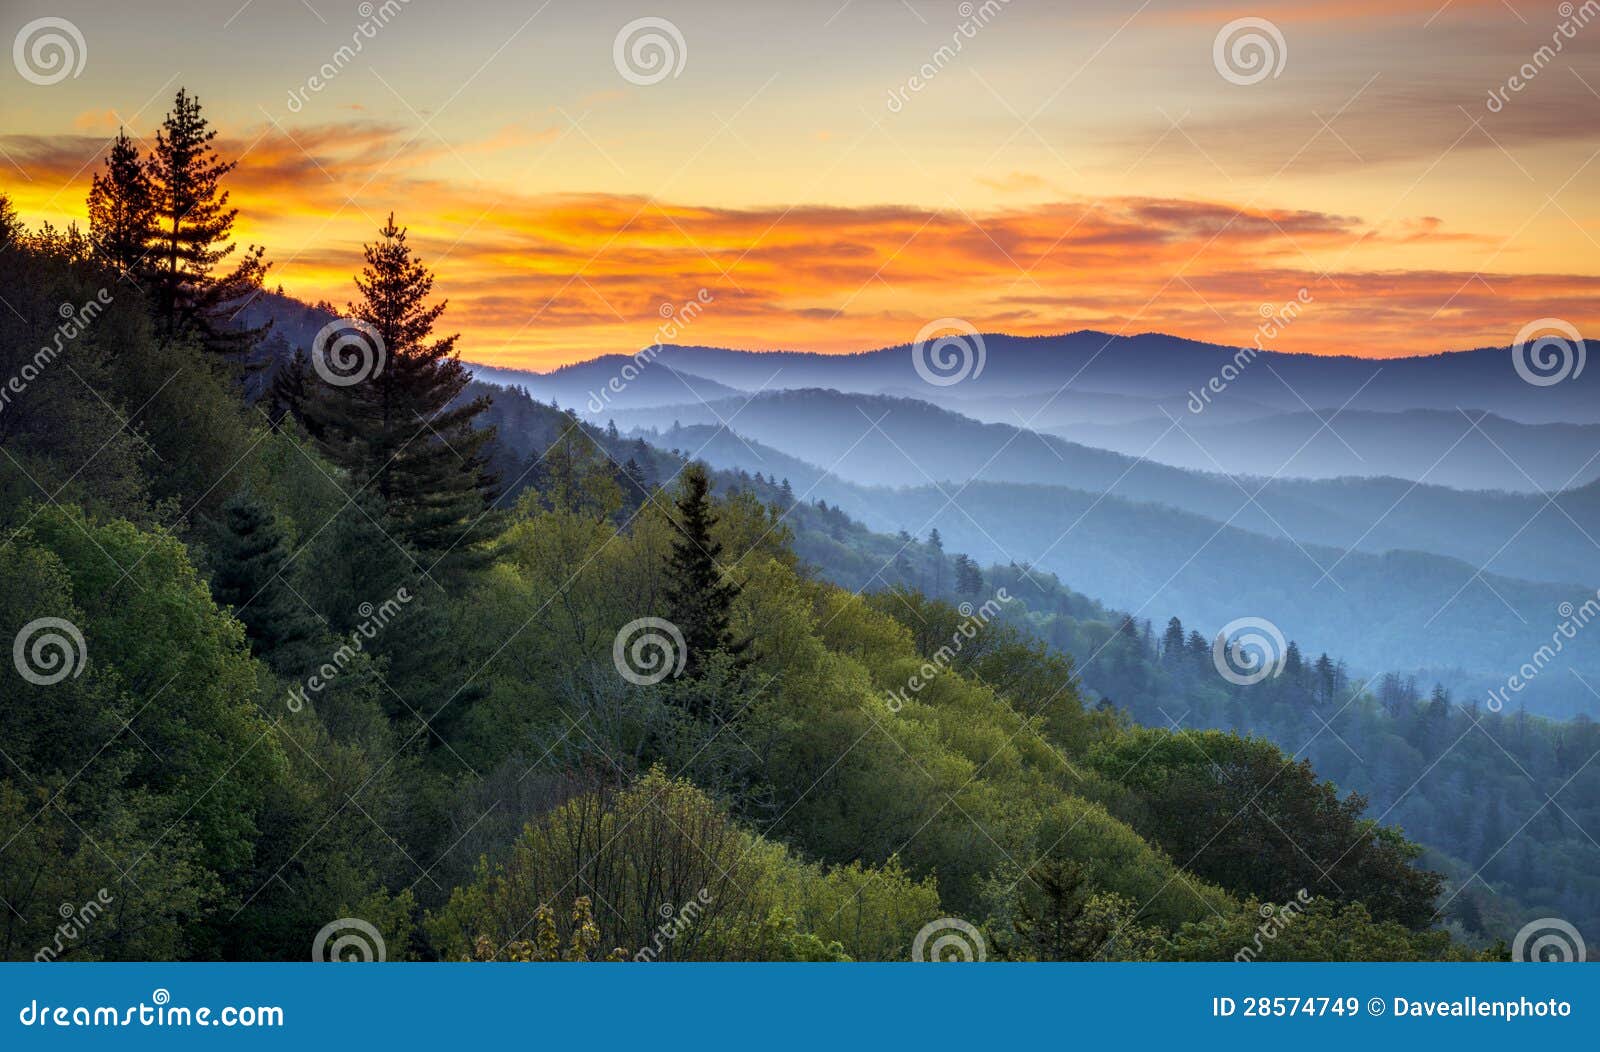 great smoky mountains national park scenic sunrise landscape